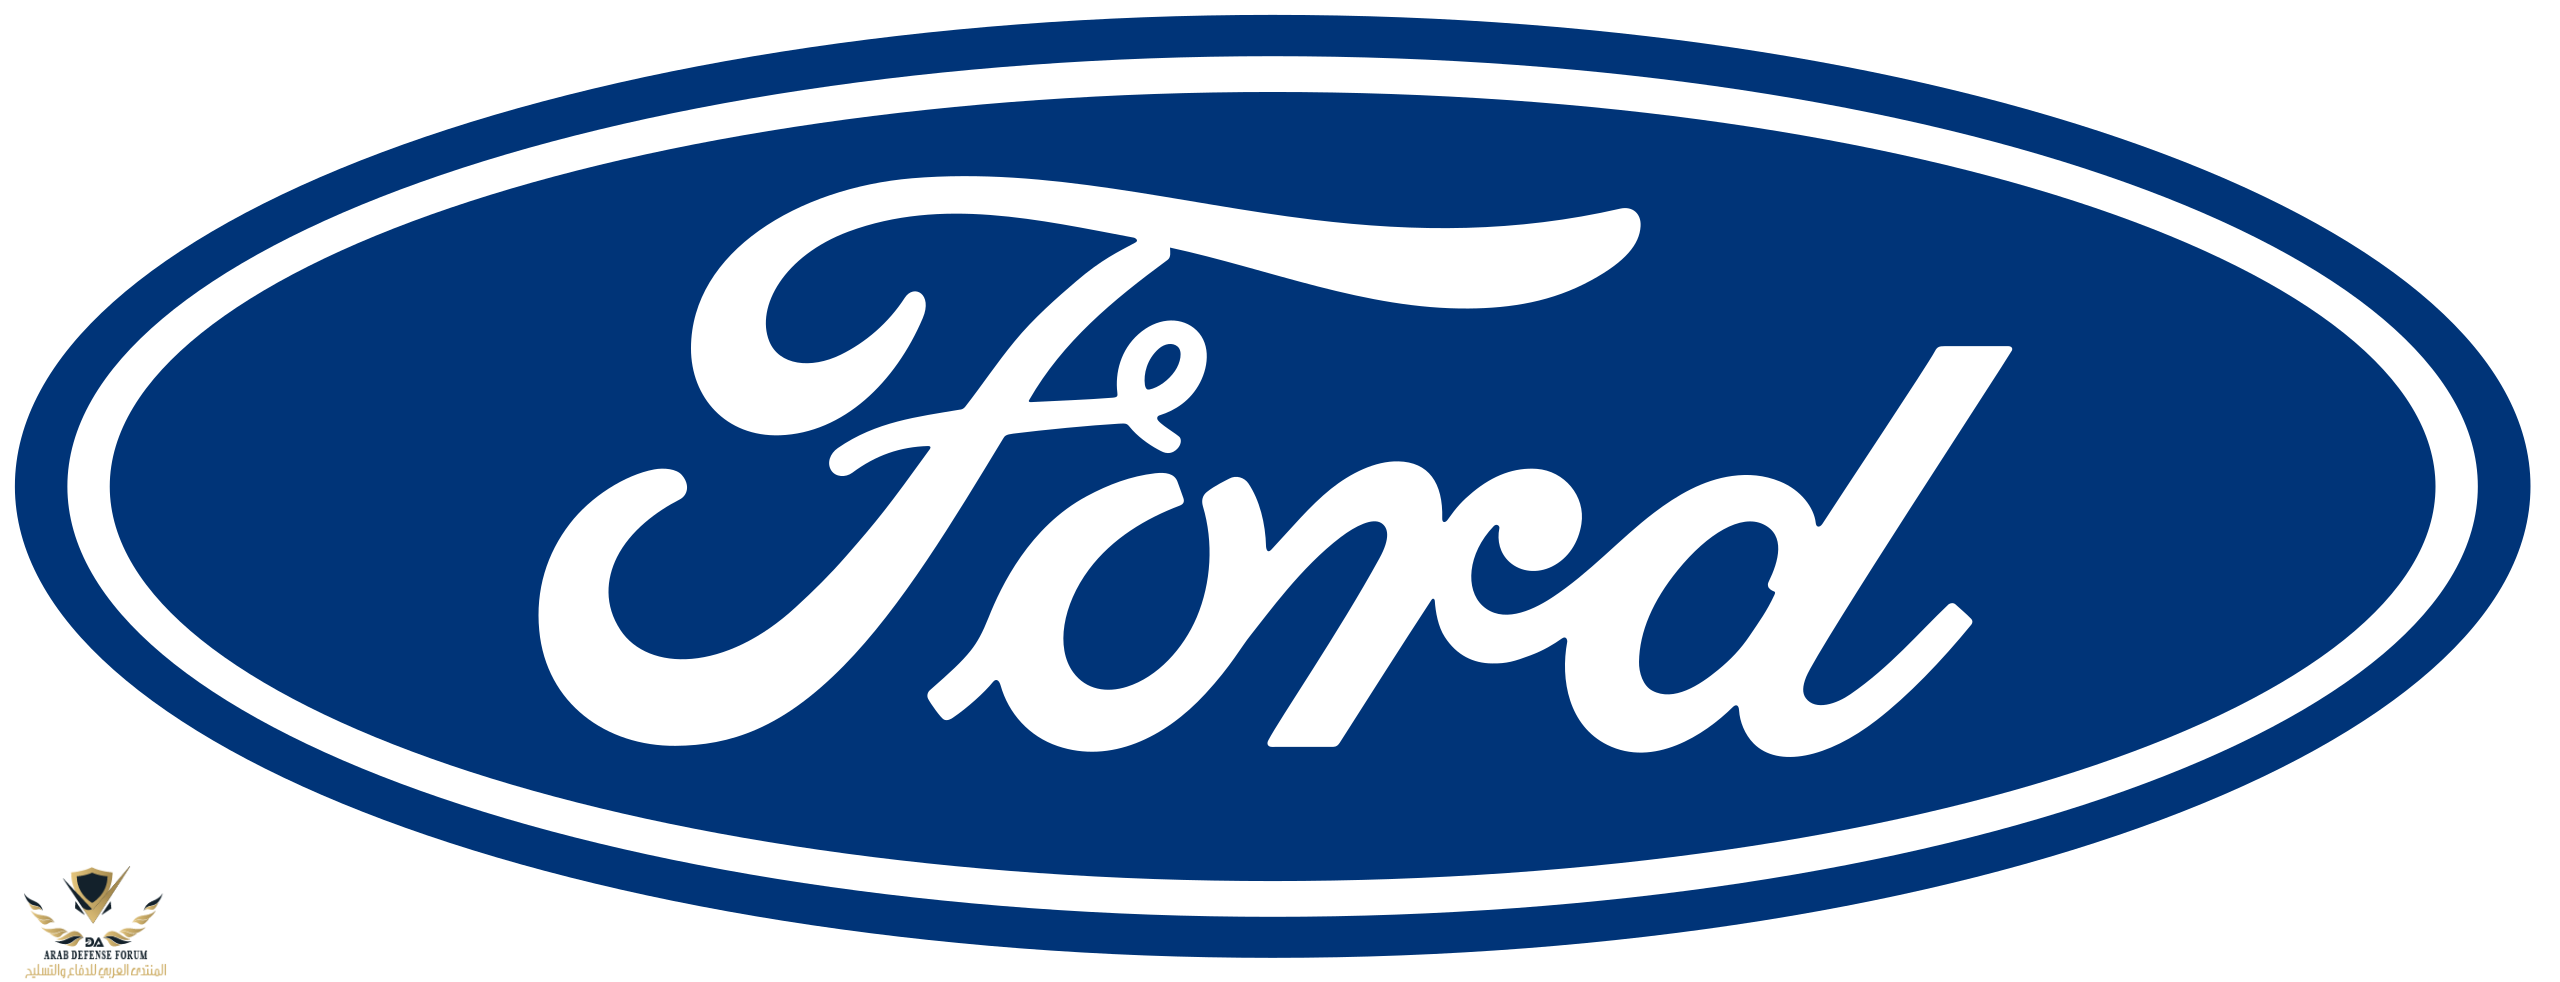 Ford_logo_flat.svg.png